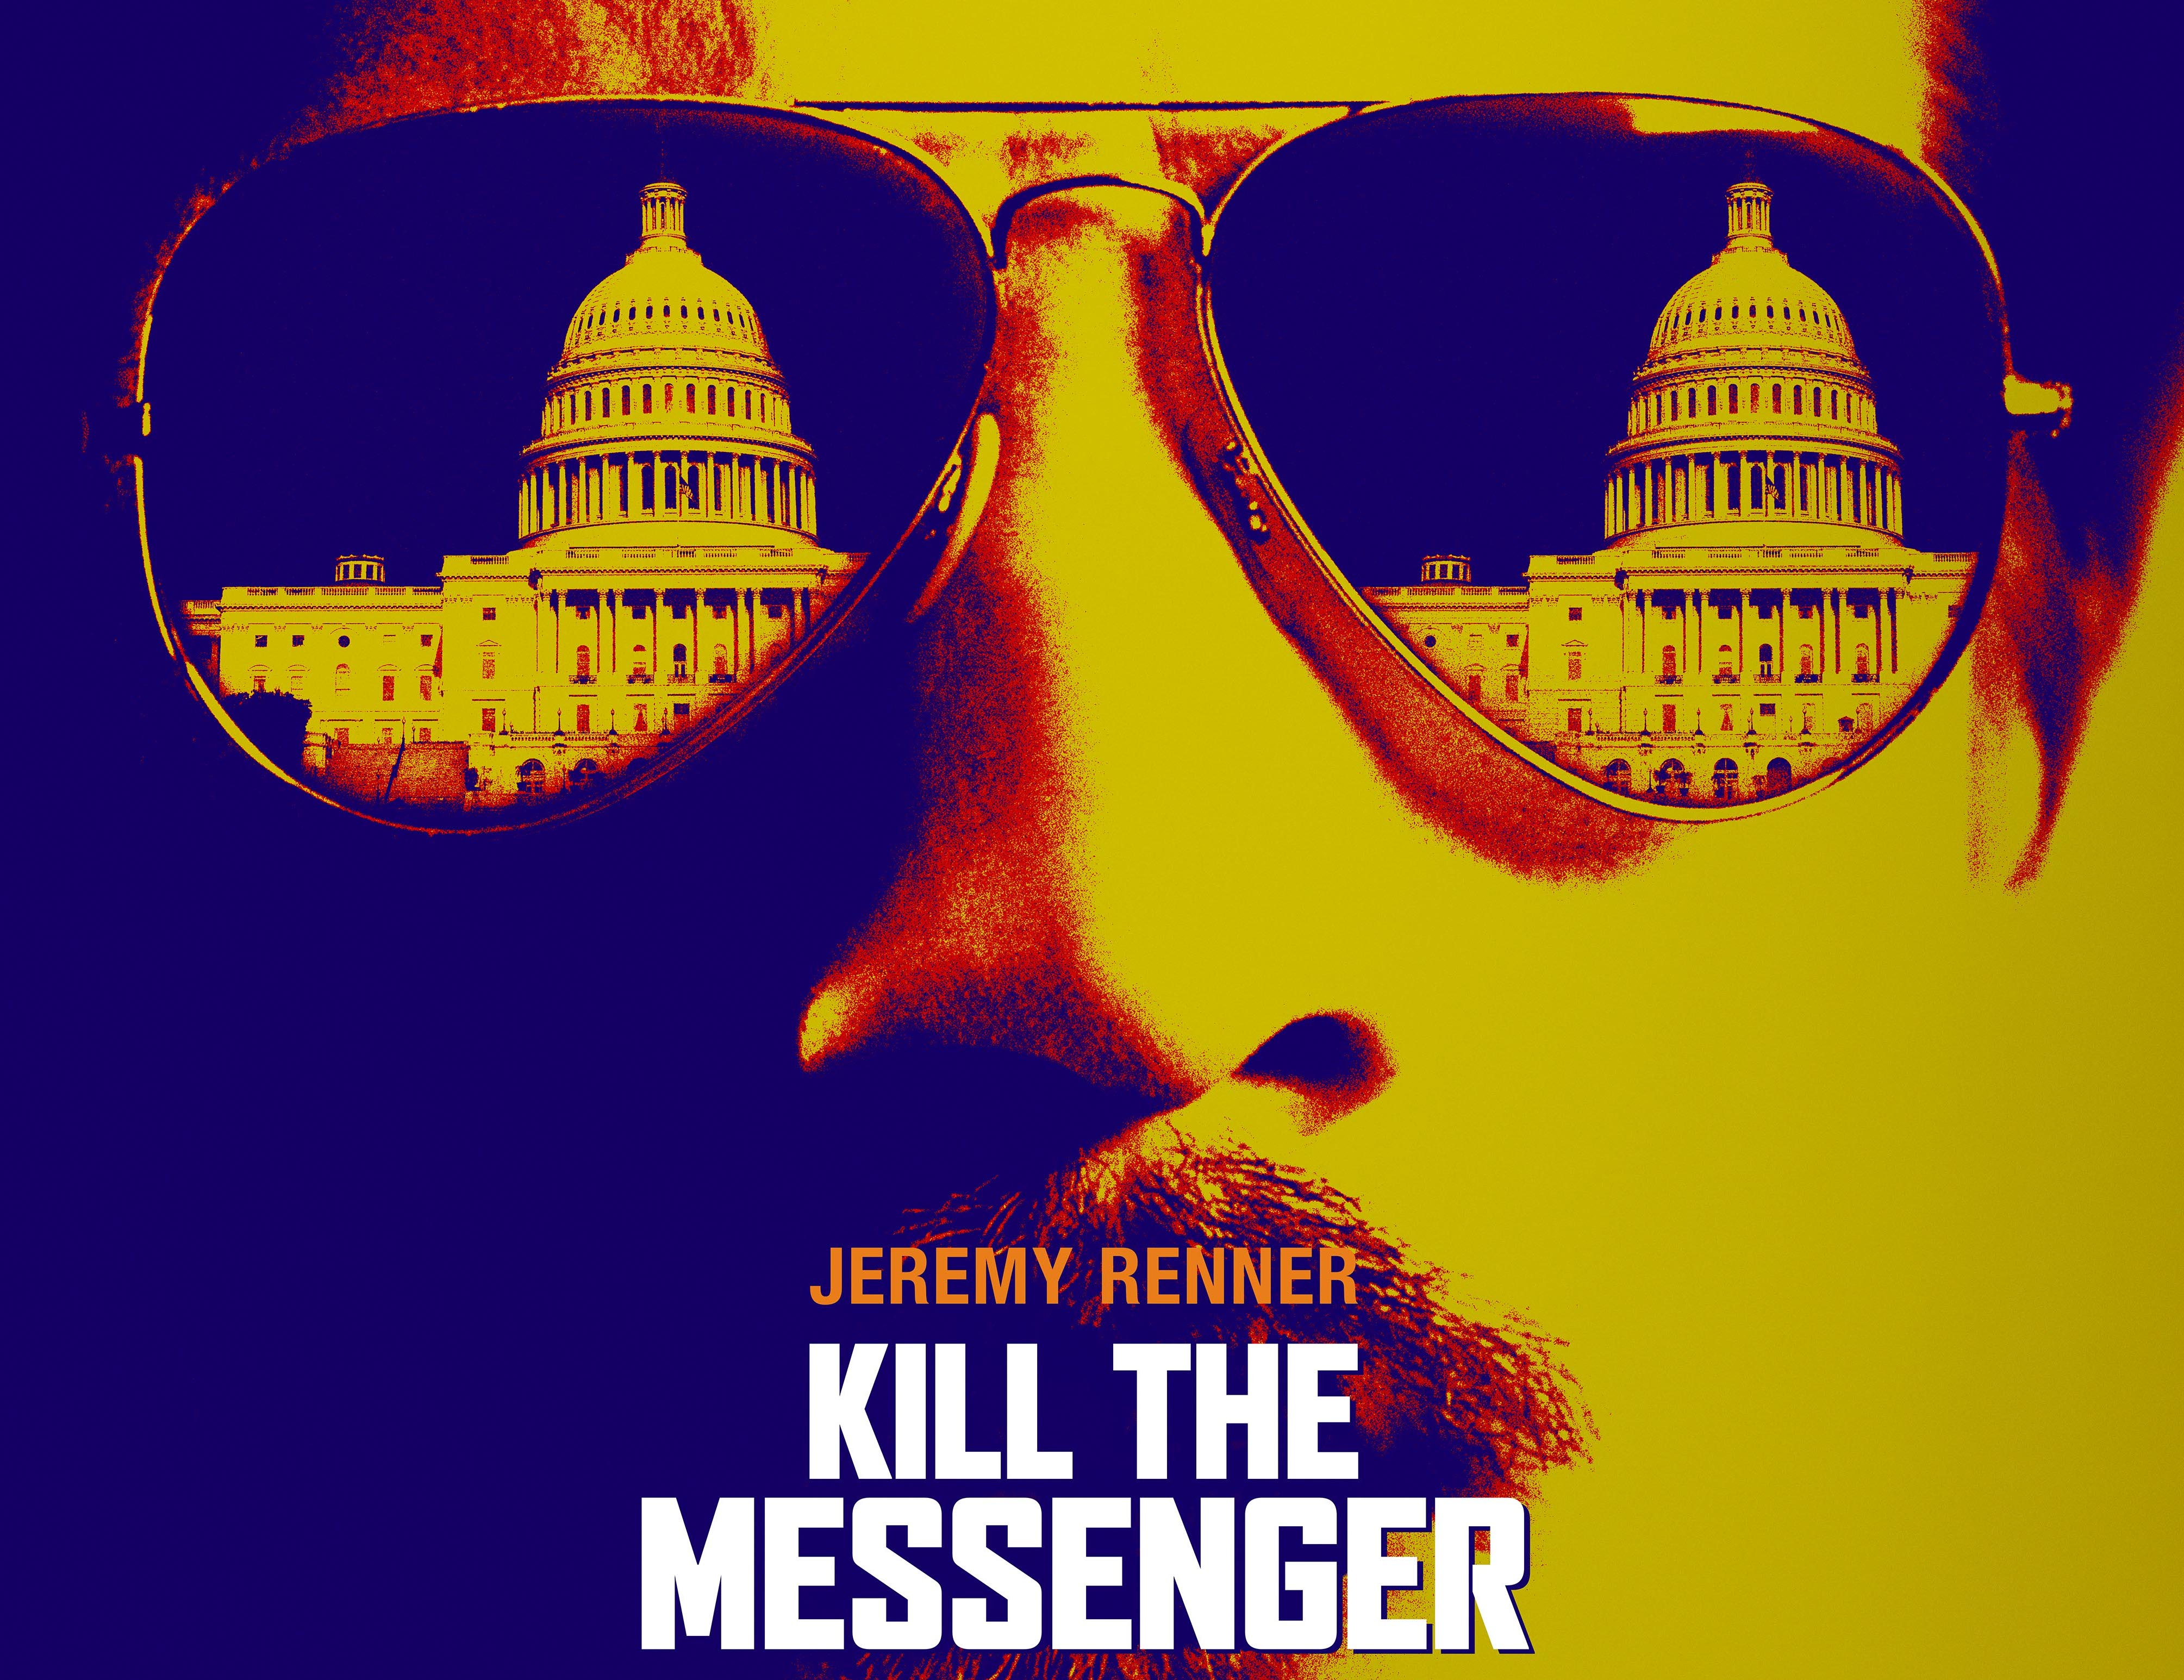 Kill the Messenger. The Messenger плакат. Kill the Messenger 2014 poster.